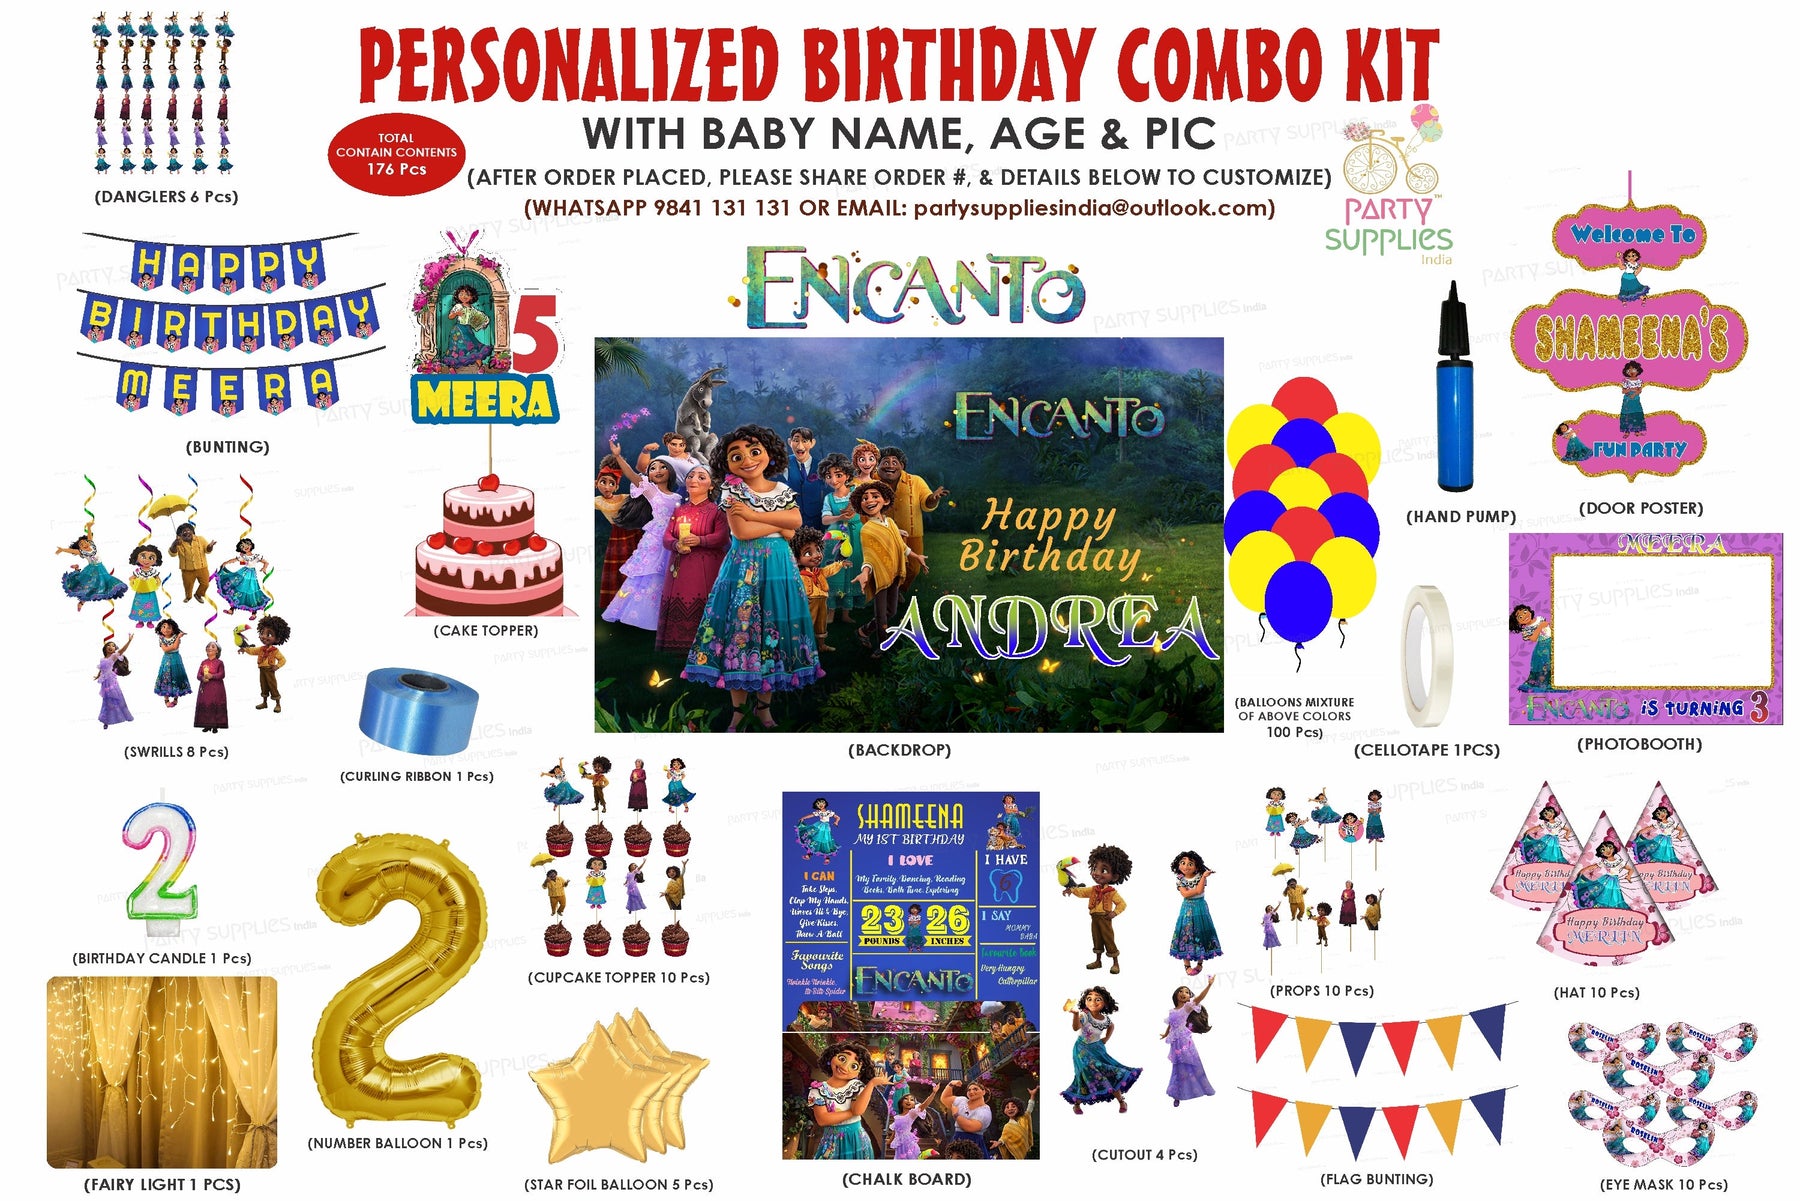 PSI Encanto Theme Premium Combo Kit